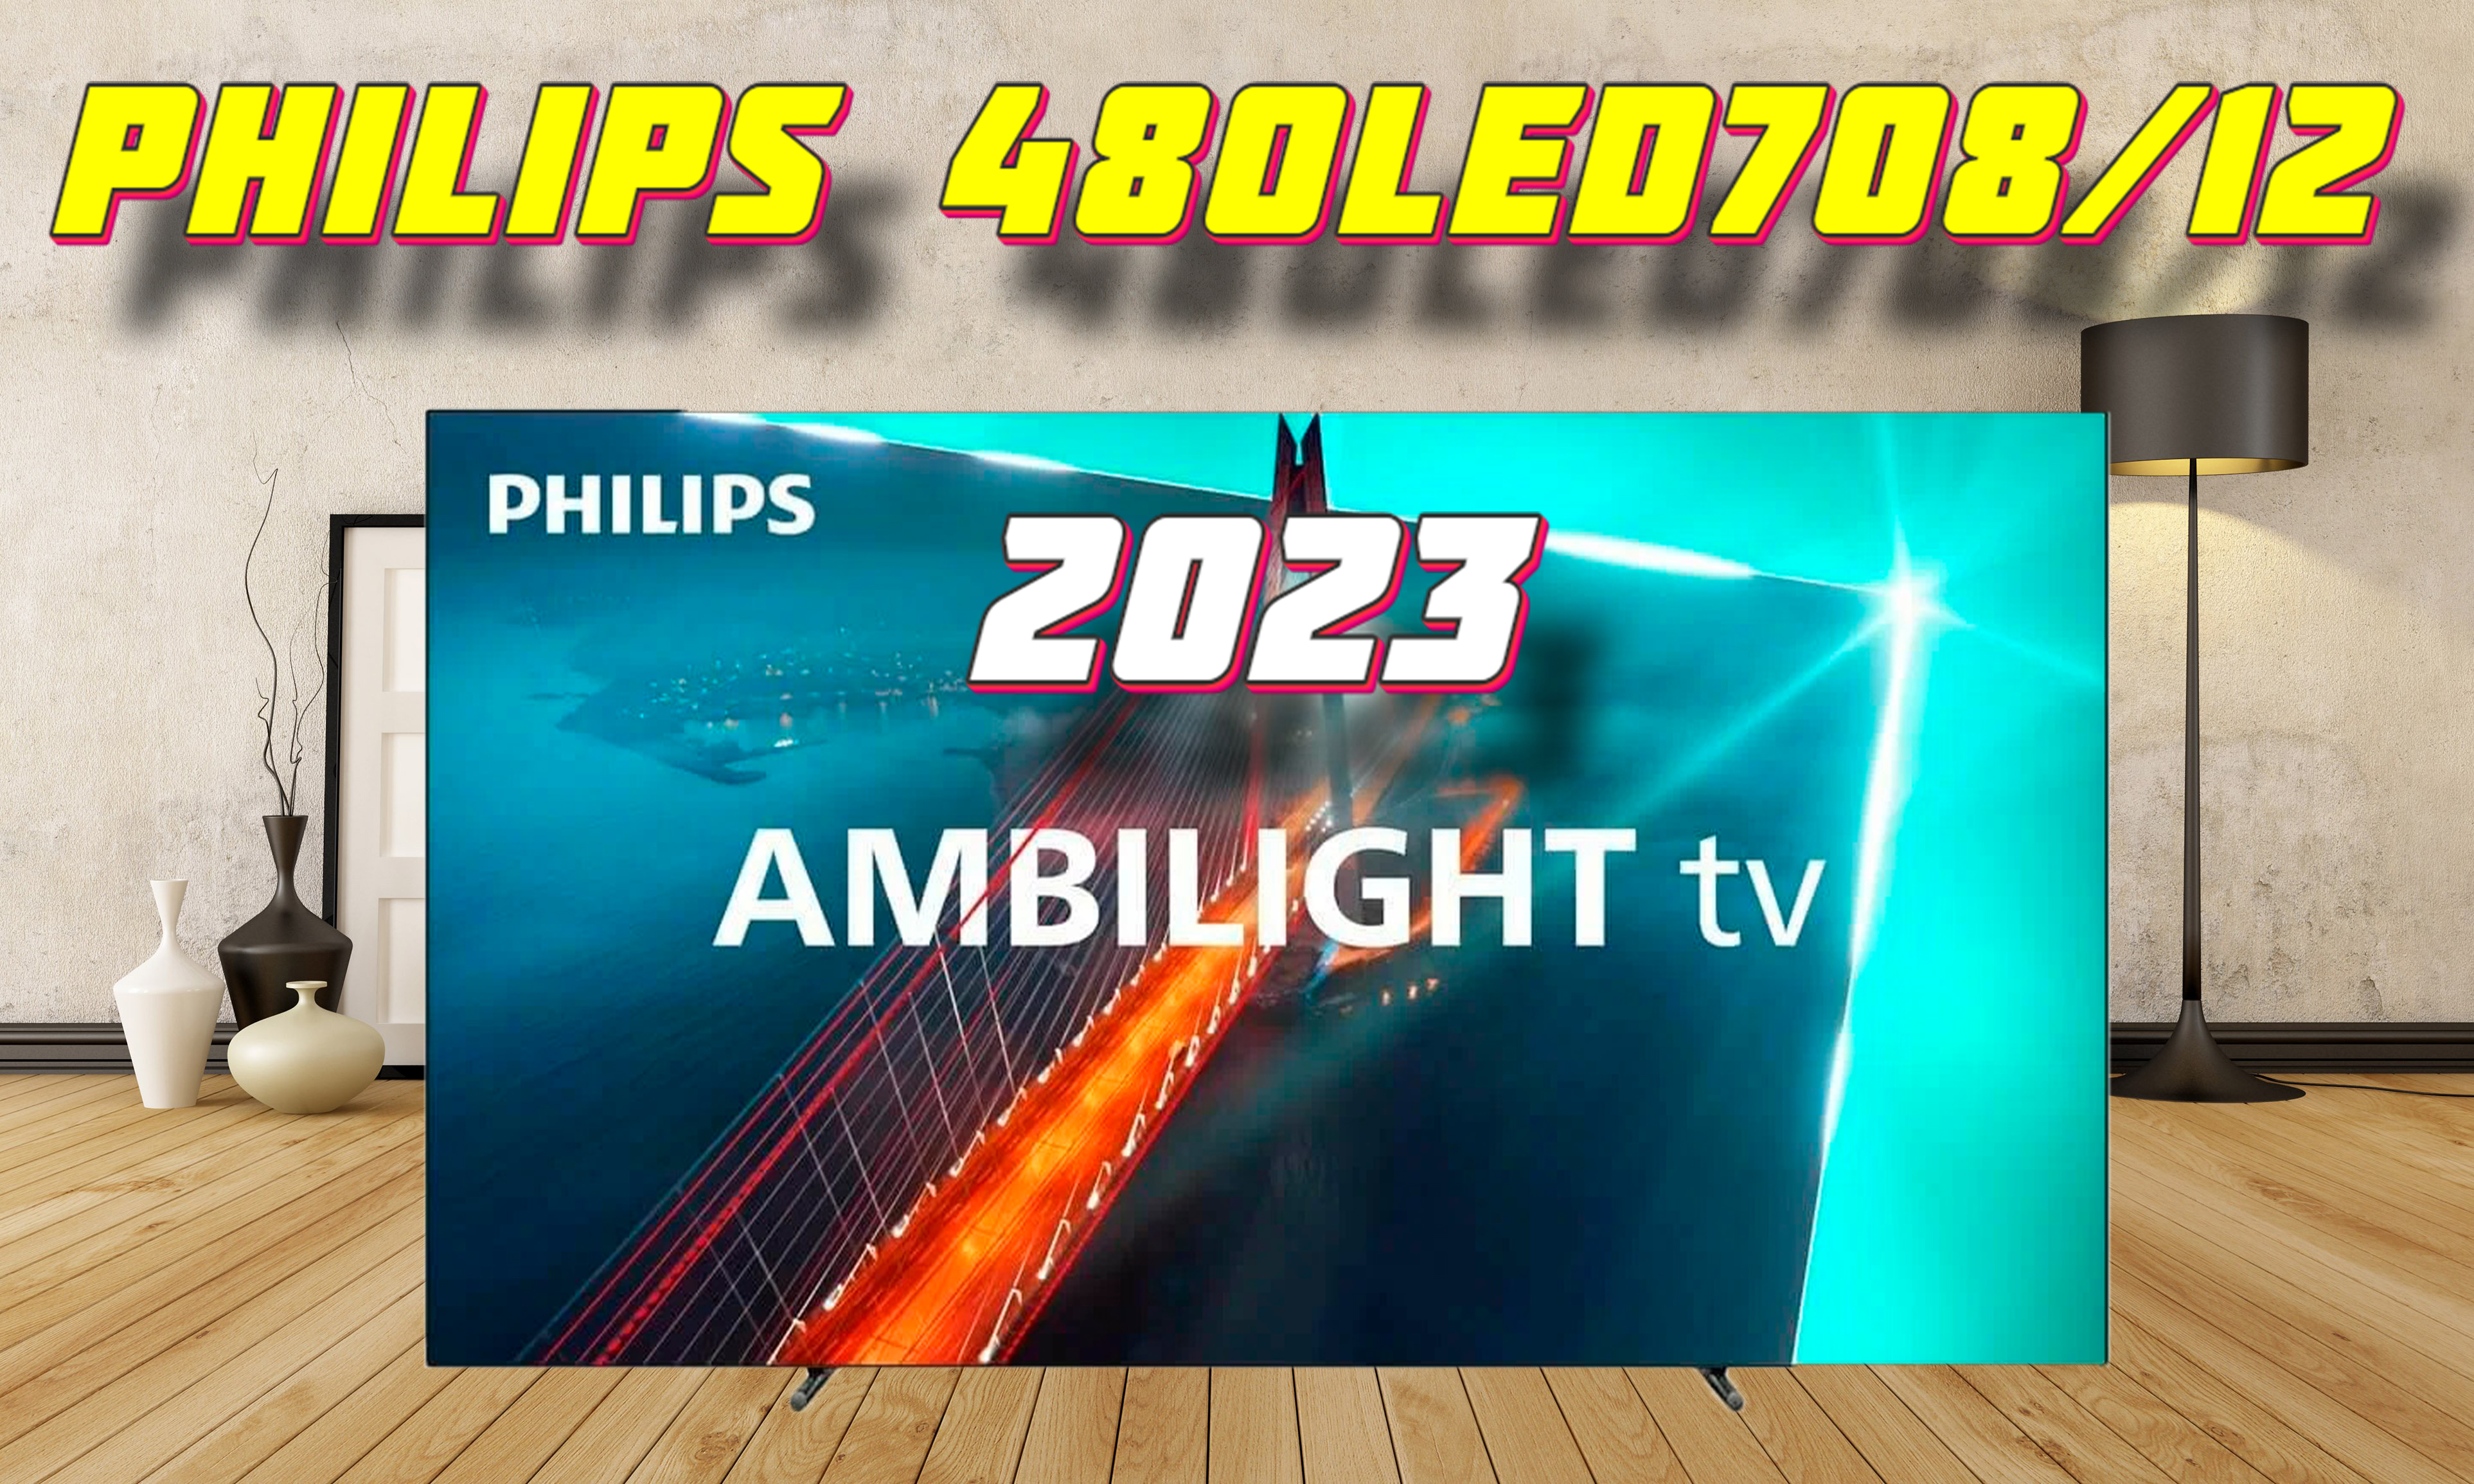 Philips 48oled708 12